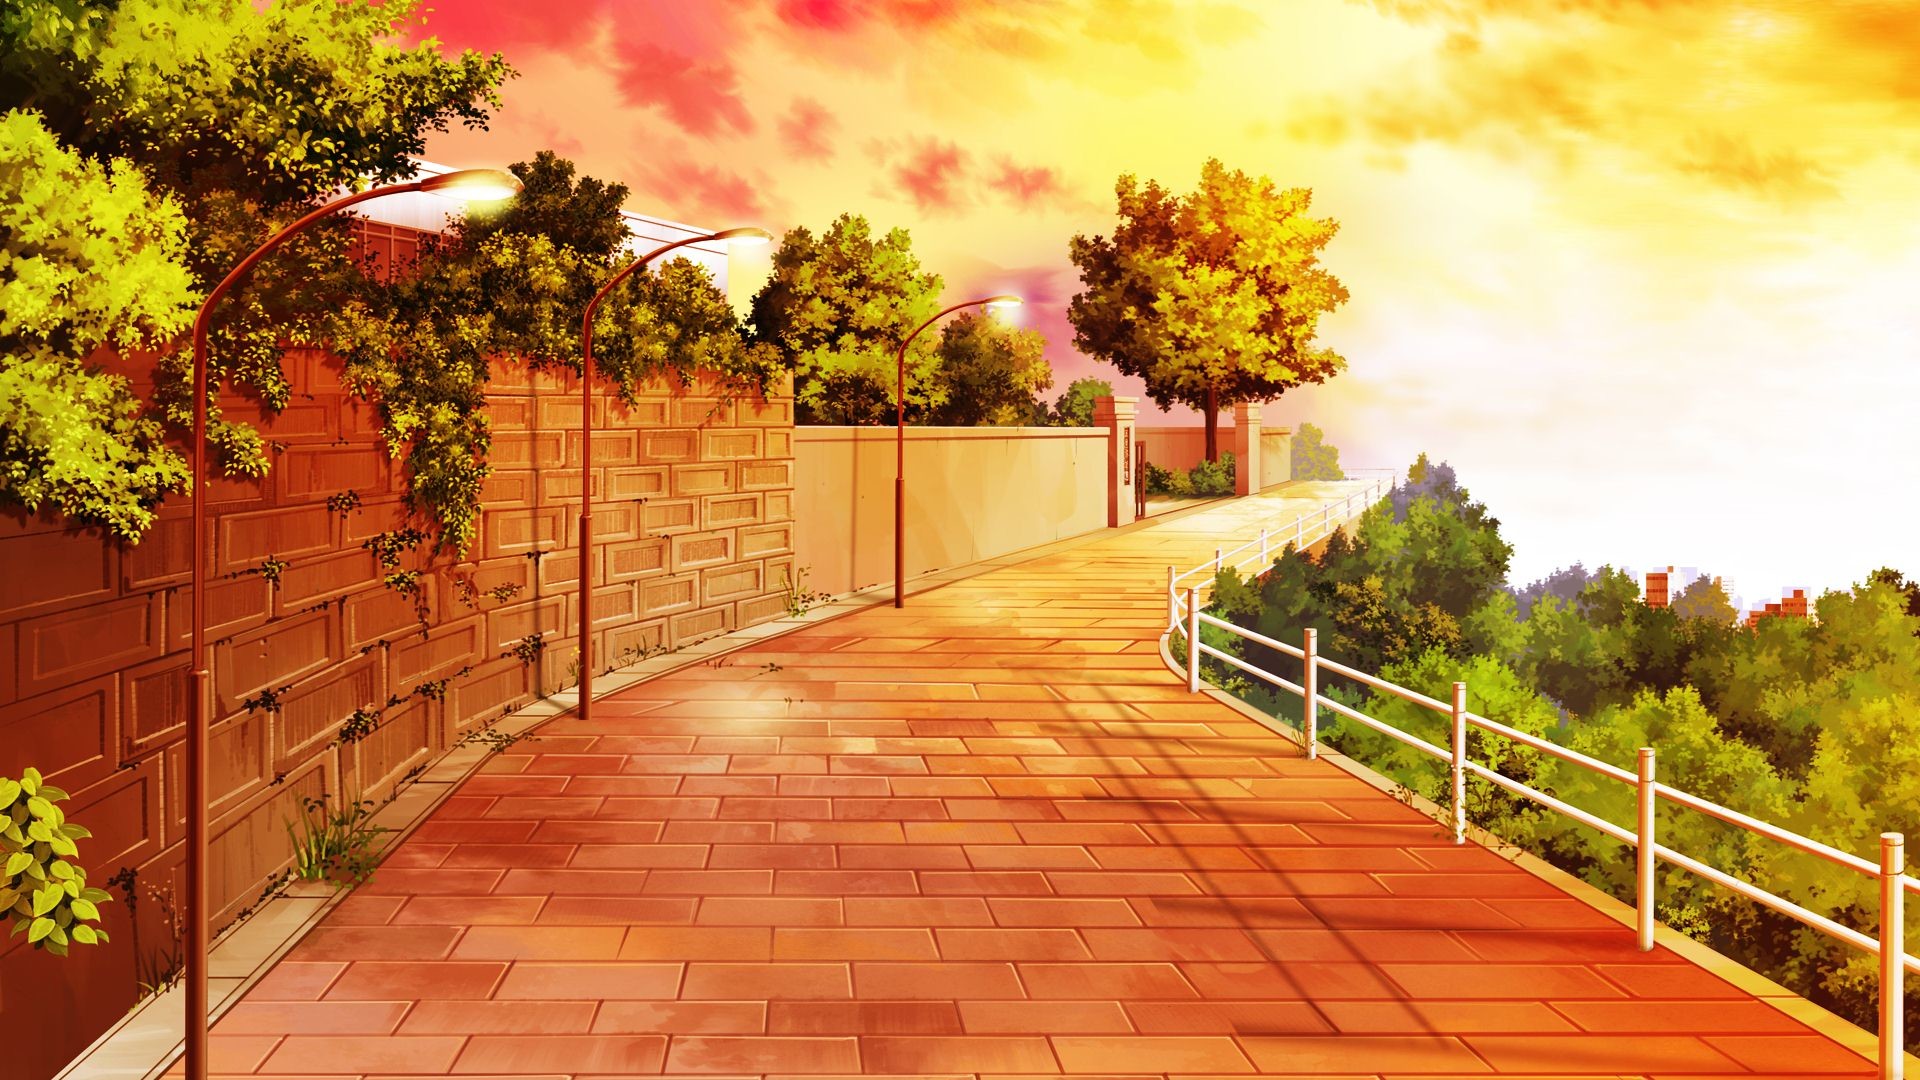 1920x1080 anime scenery wallpaper background 7981